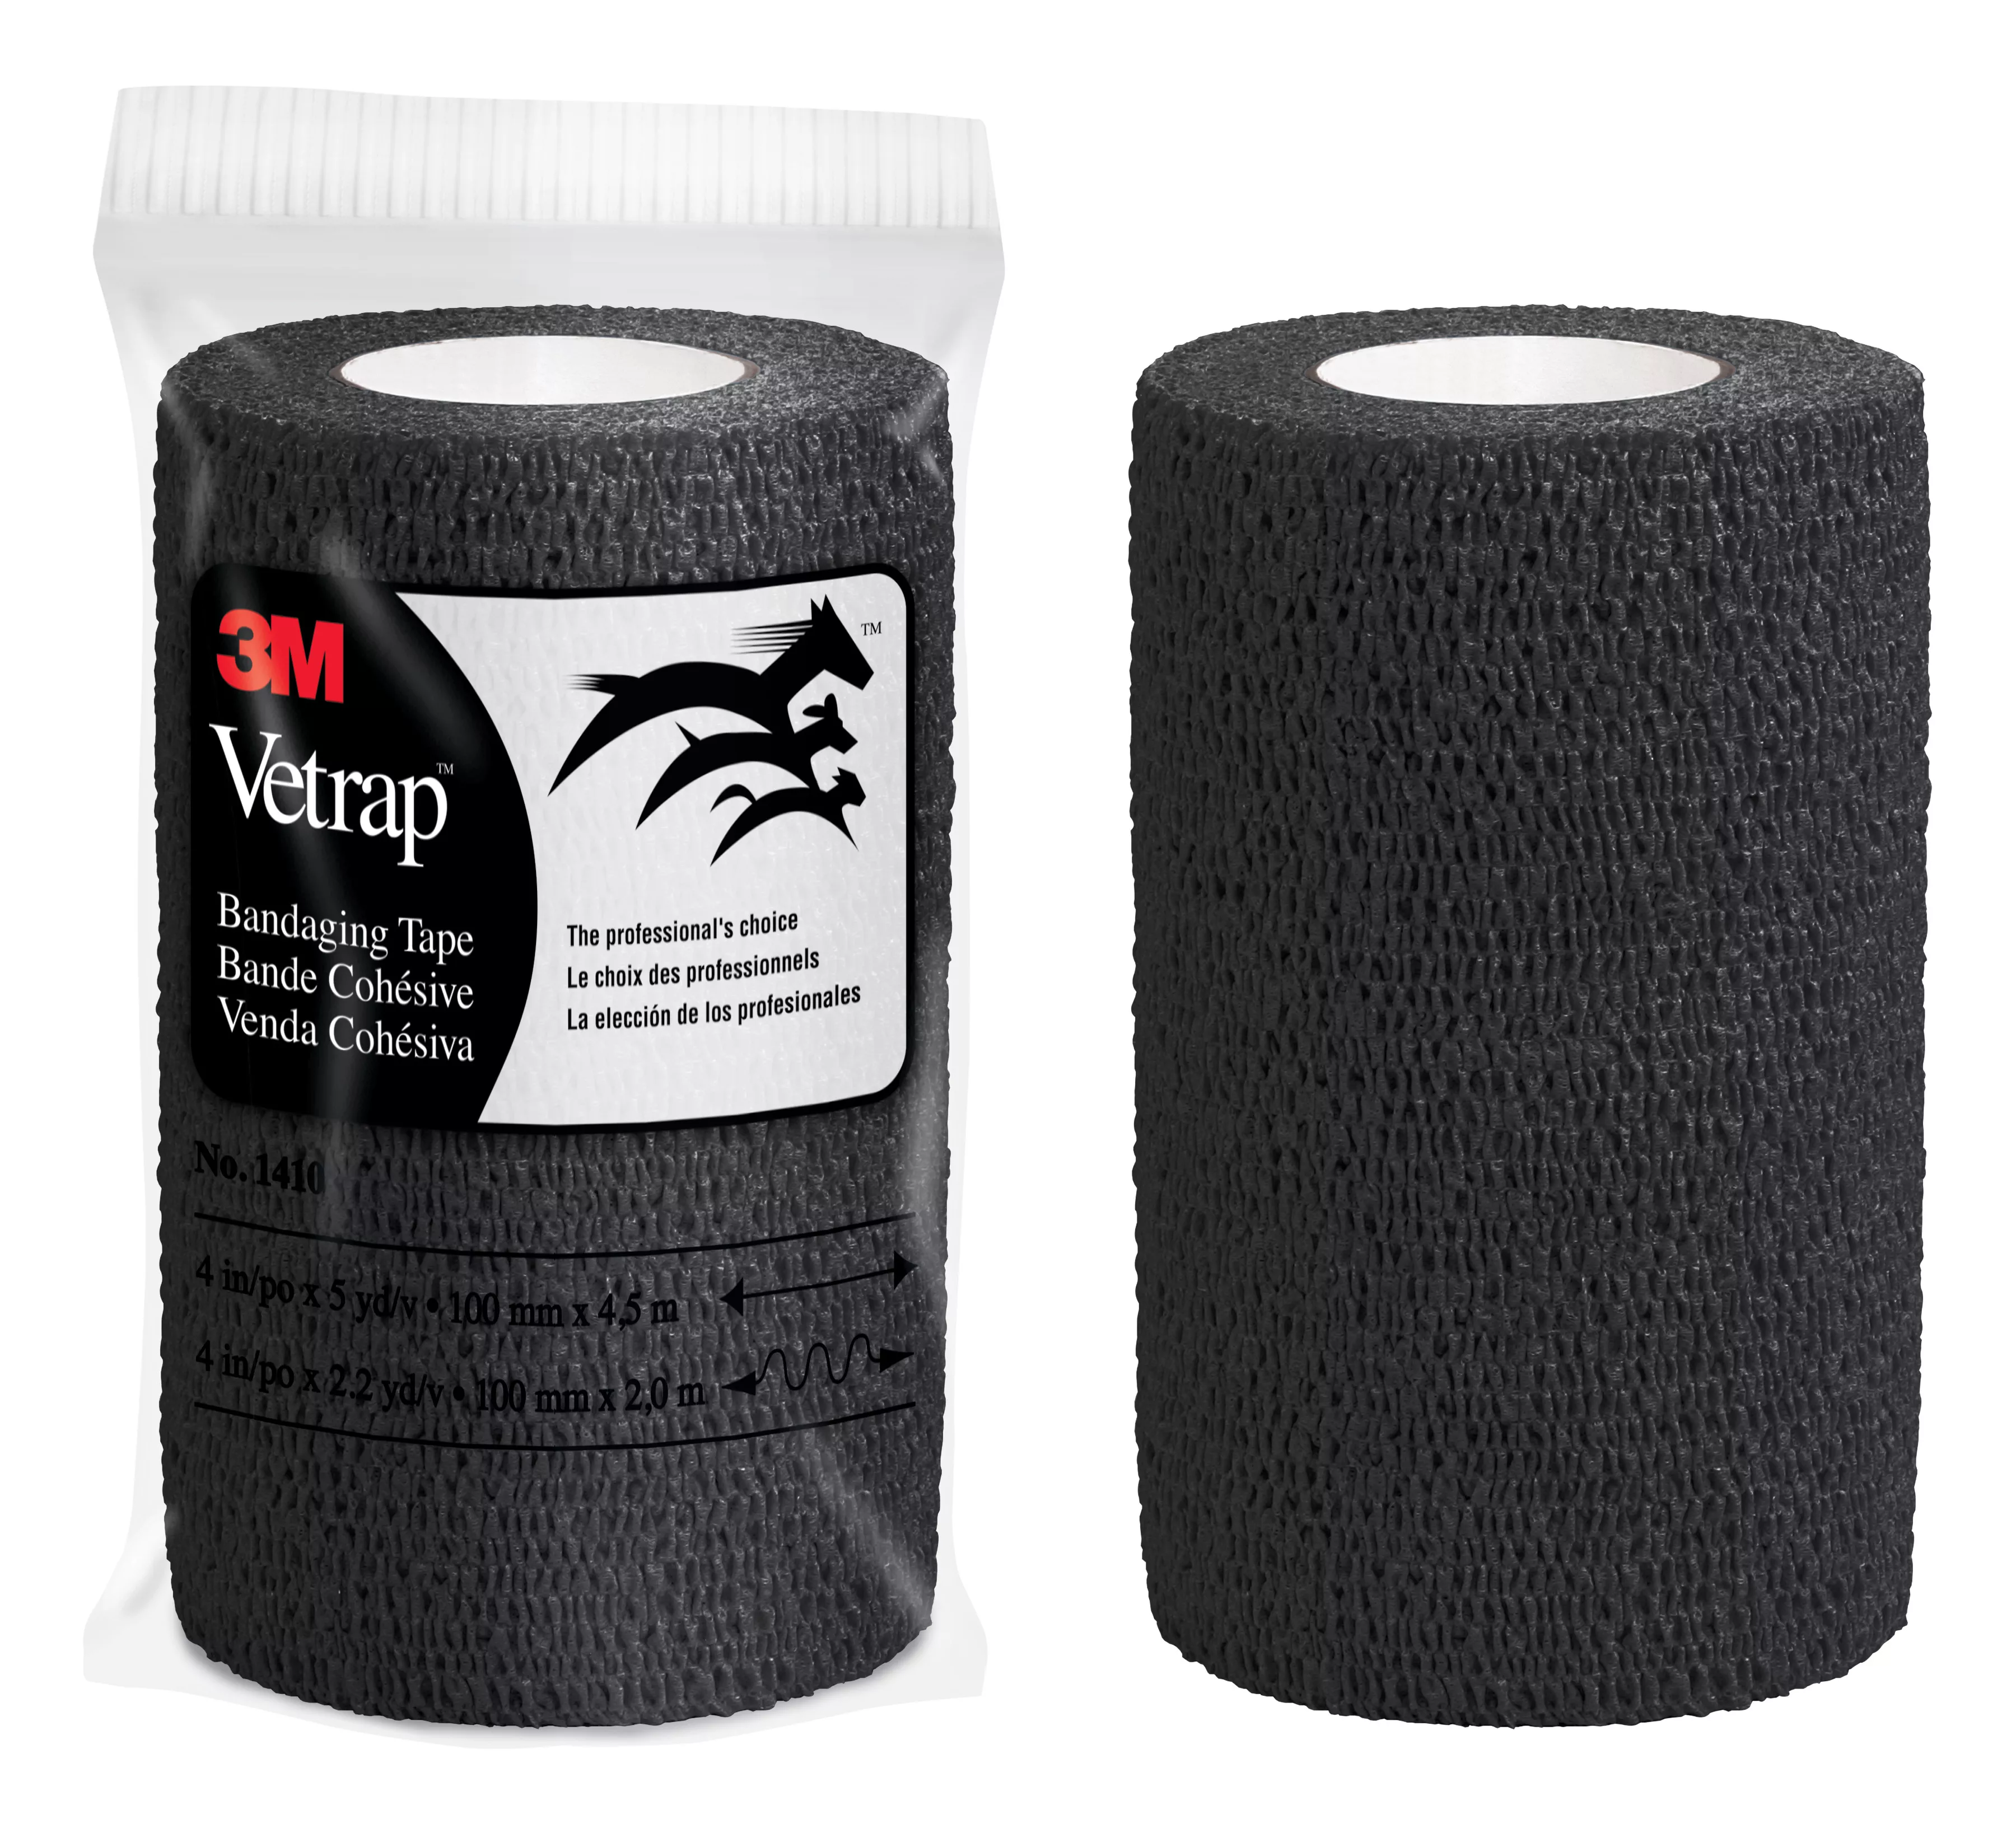 3M™ Vetrap™ Bandaging Tape 1410BK-18, Black, 4 inch (10 cm), 100 Rolls/Case